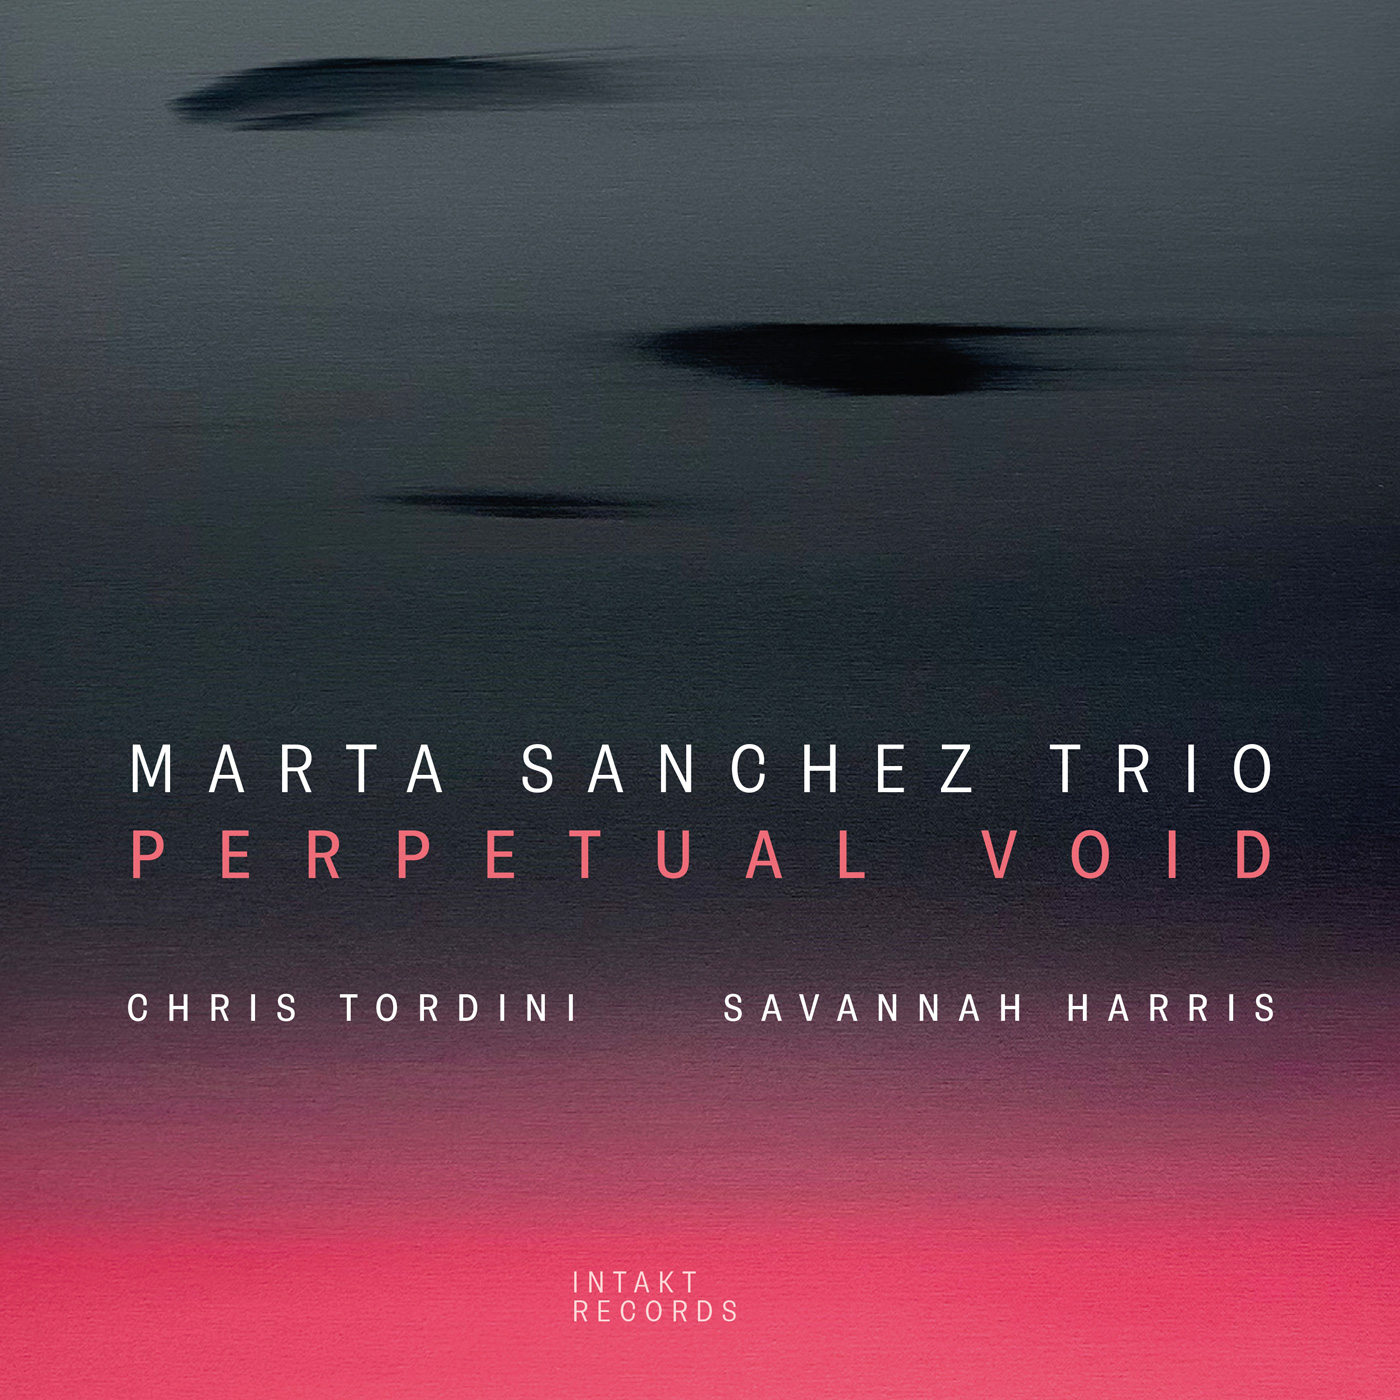 Cover Intakt 421 MARTA SANCHEZ TRIO
with Chris Tordini and Savannah Harris
PERPETUAL VOID